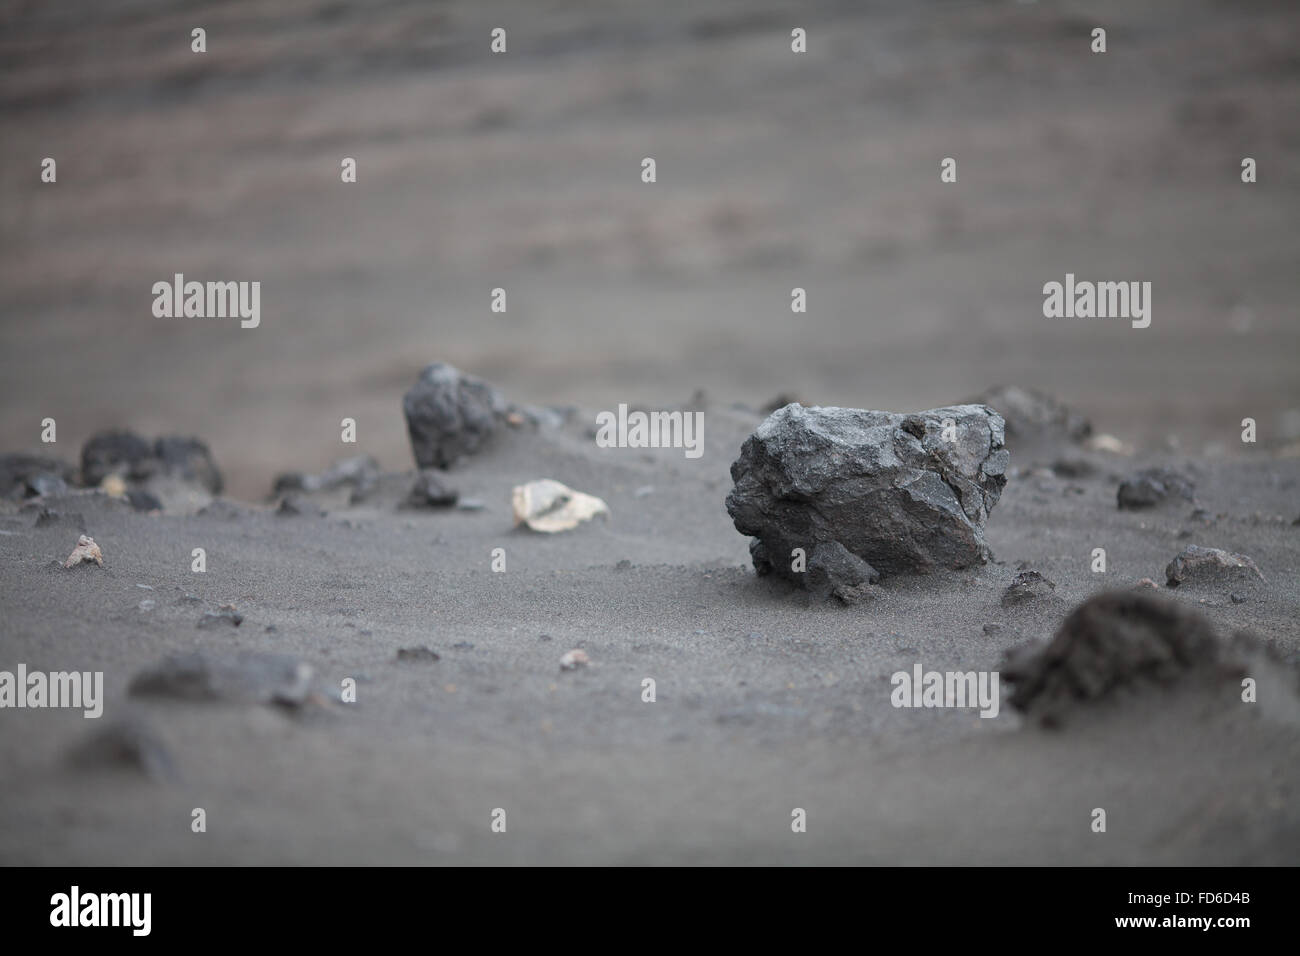 Rocks On Arid Landscape Stock Photo